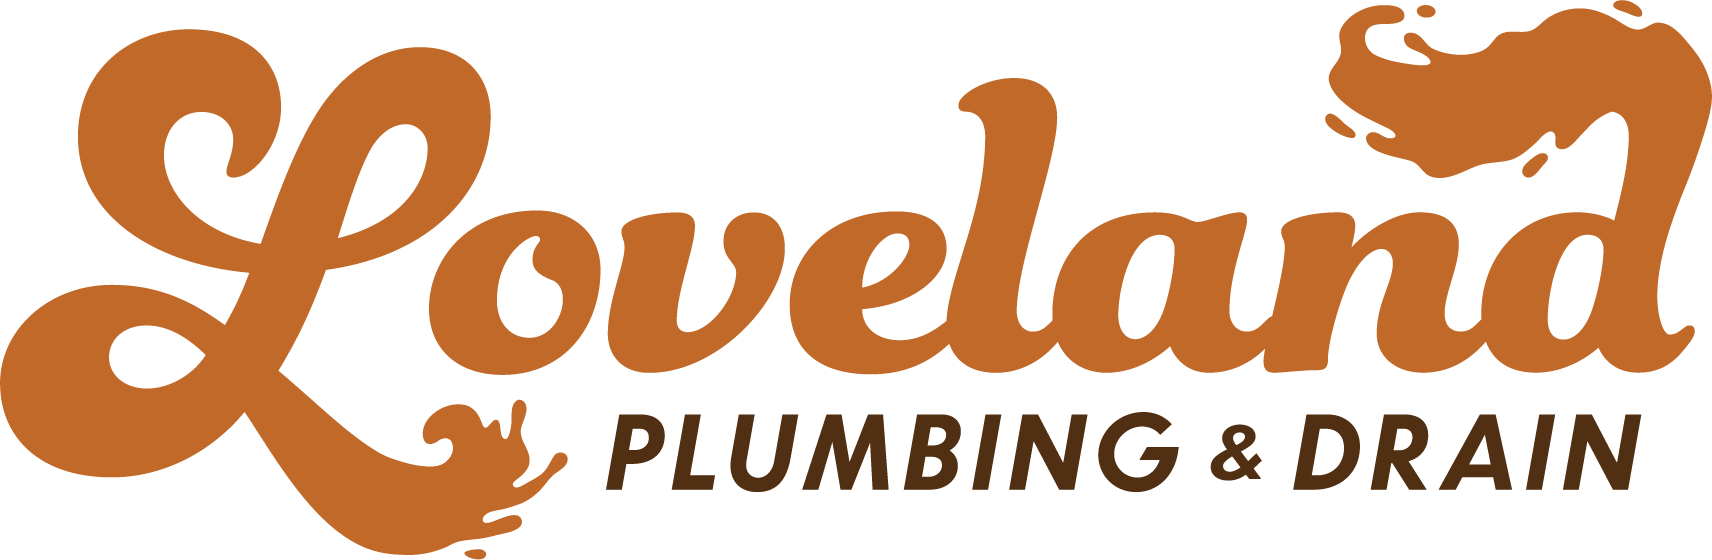 Plumbing Cincinnati Logo Packageai